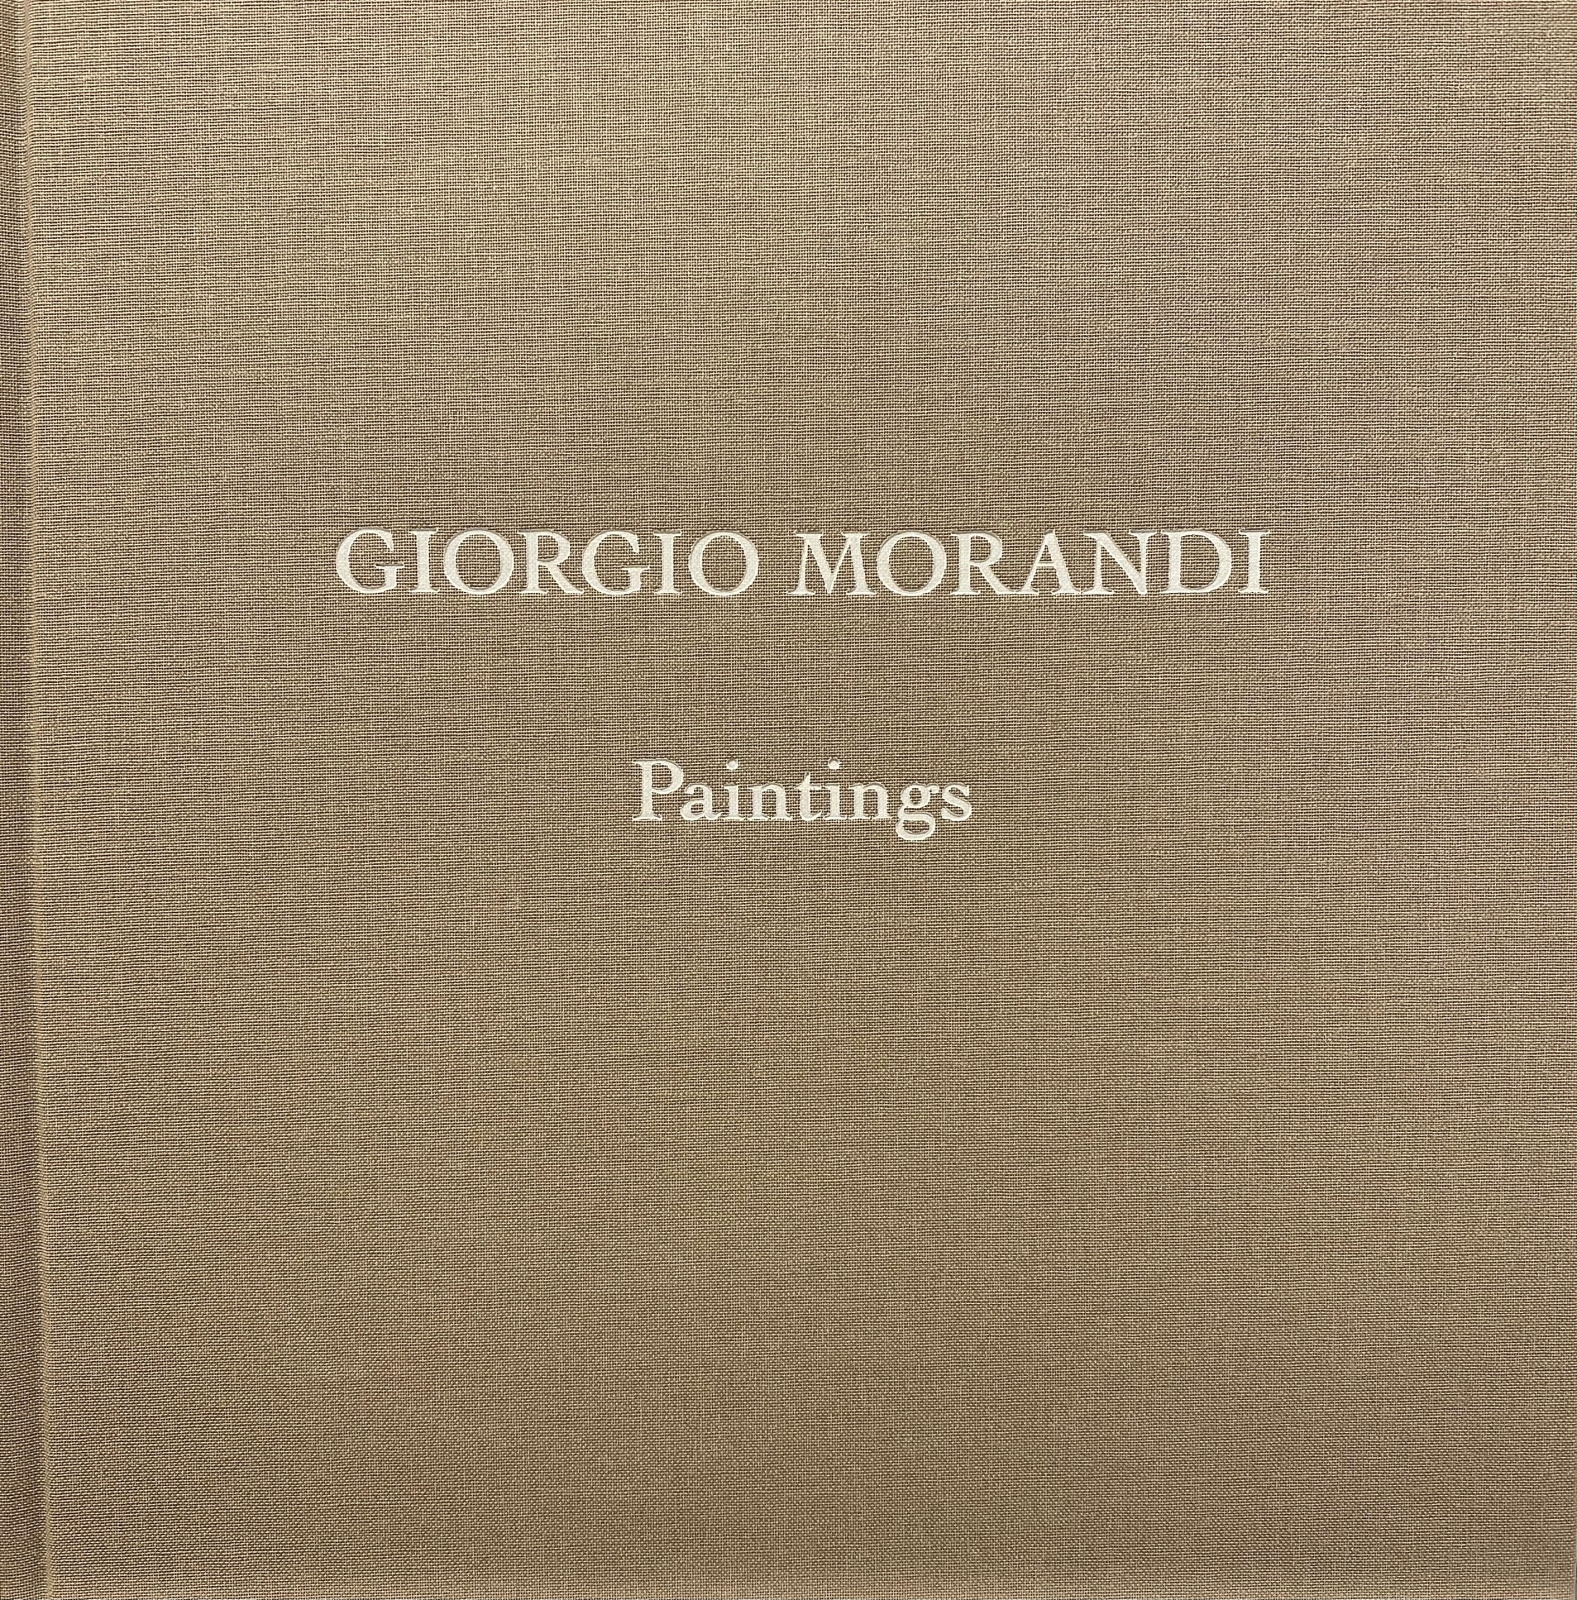 Giorgio Morandi: Paintings - November 4 - December 20, 2003 - Publications - Paul Thiebaud Gallery